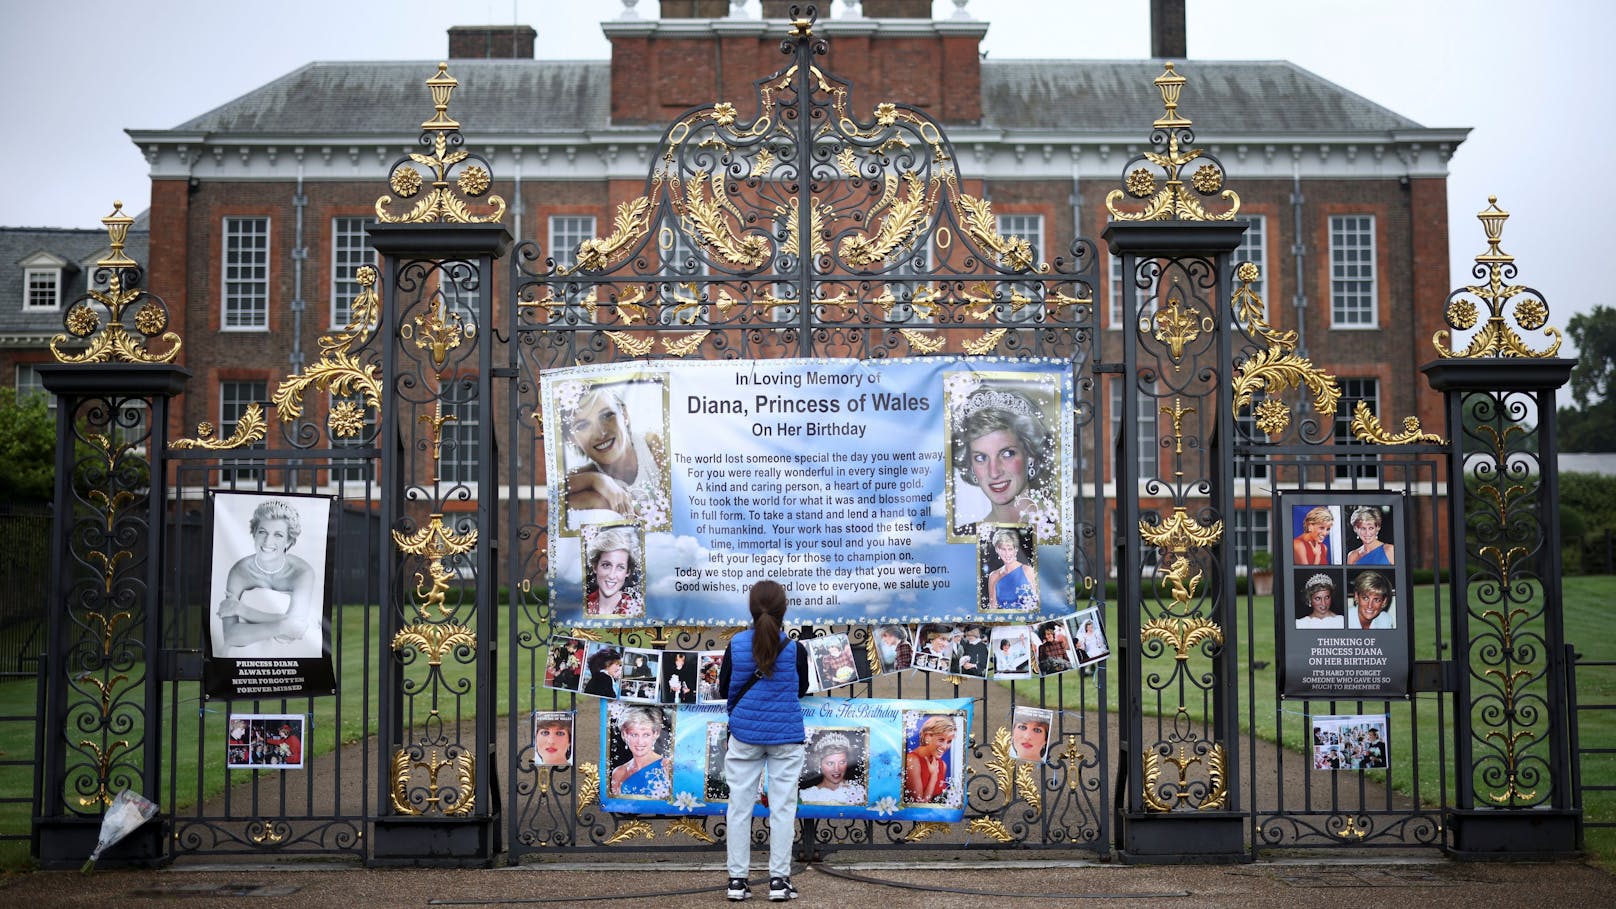 Der Eingang des Kensington Palace erinnert an die verstorbene Diana.